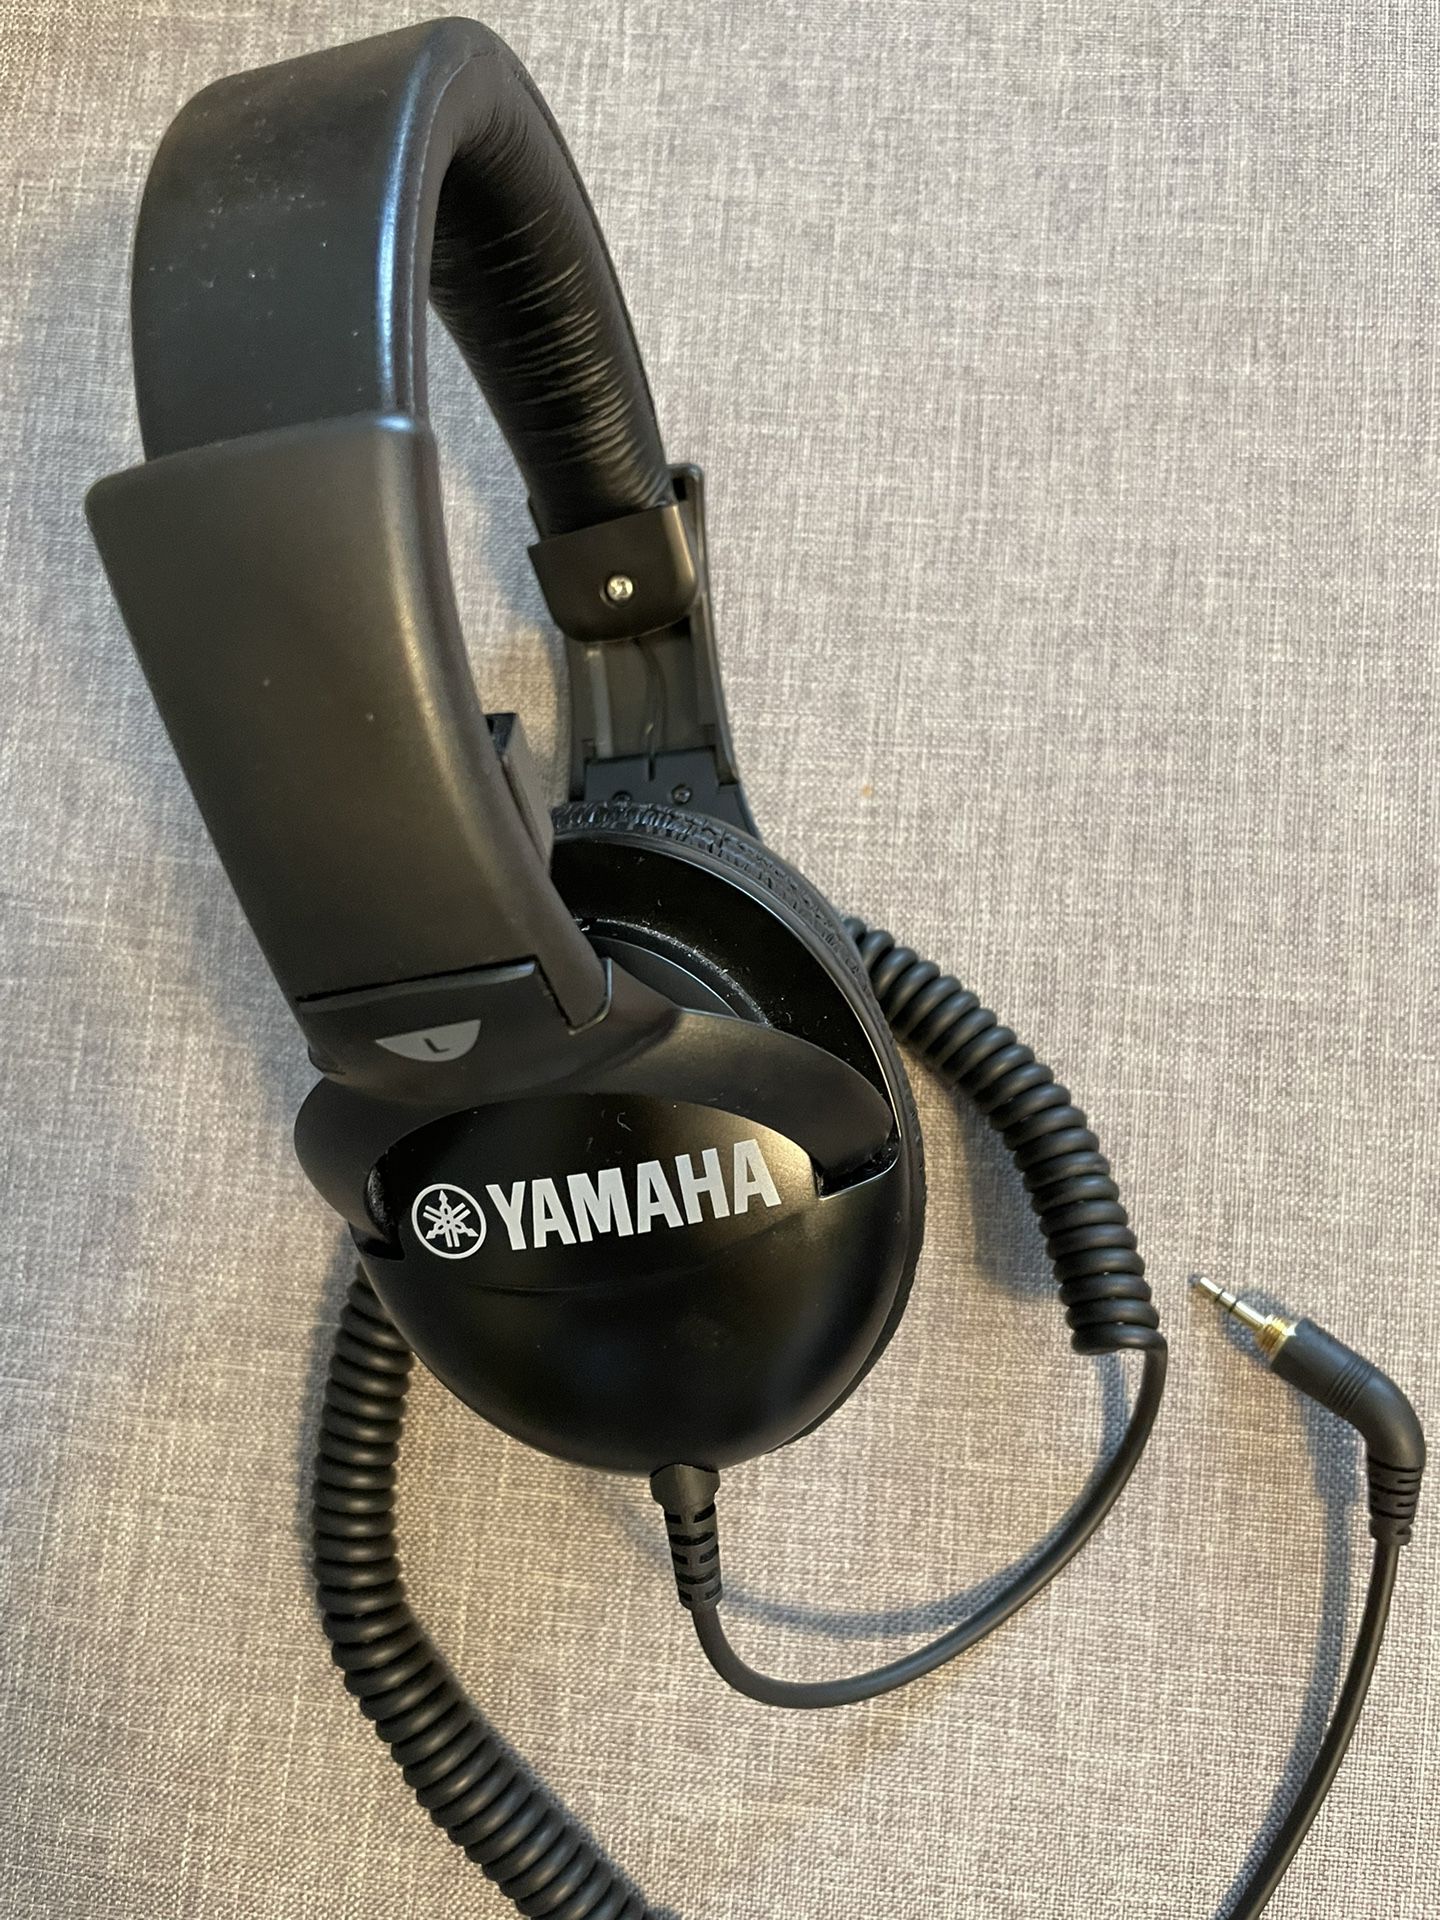 Noise Canceling Yamaha Headphones. 